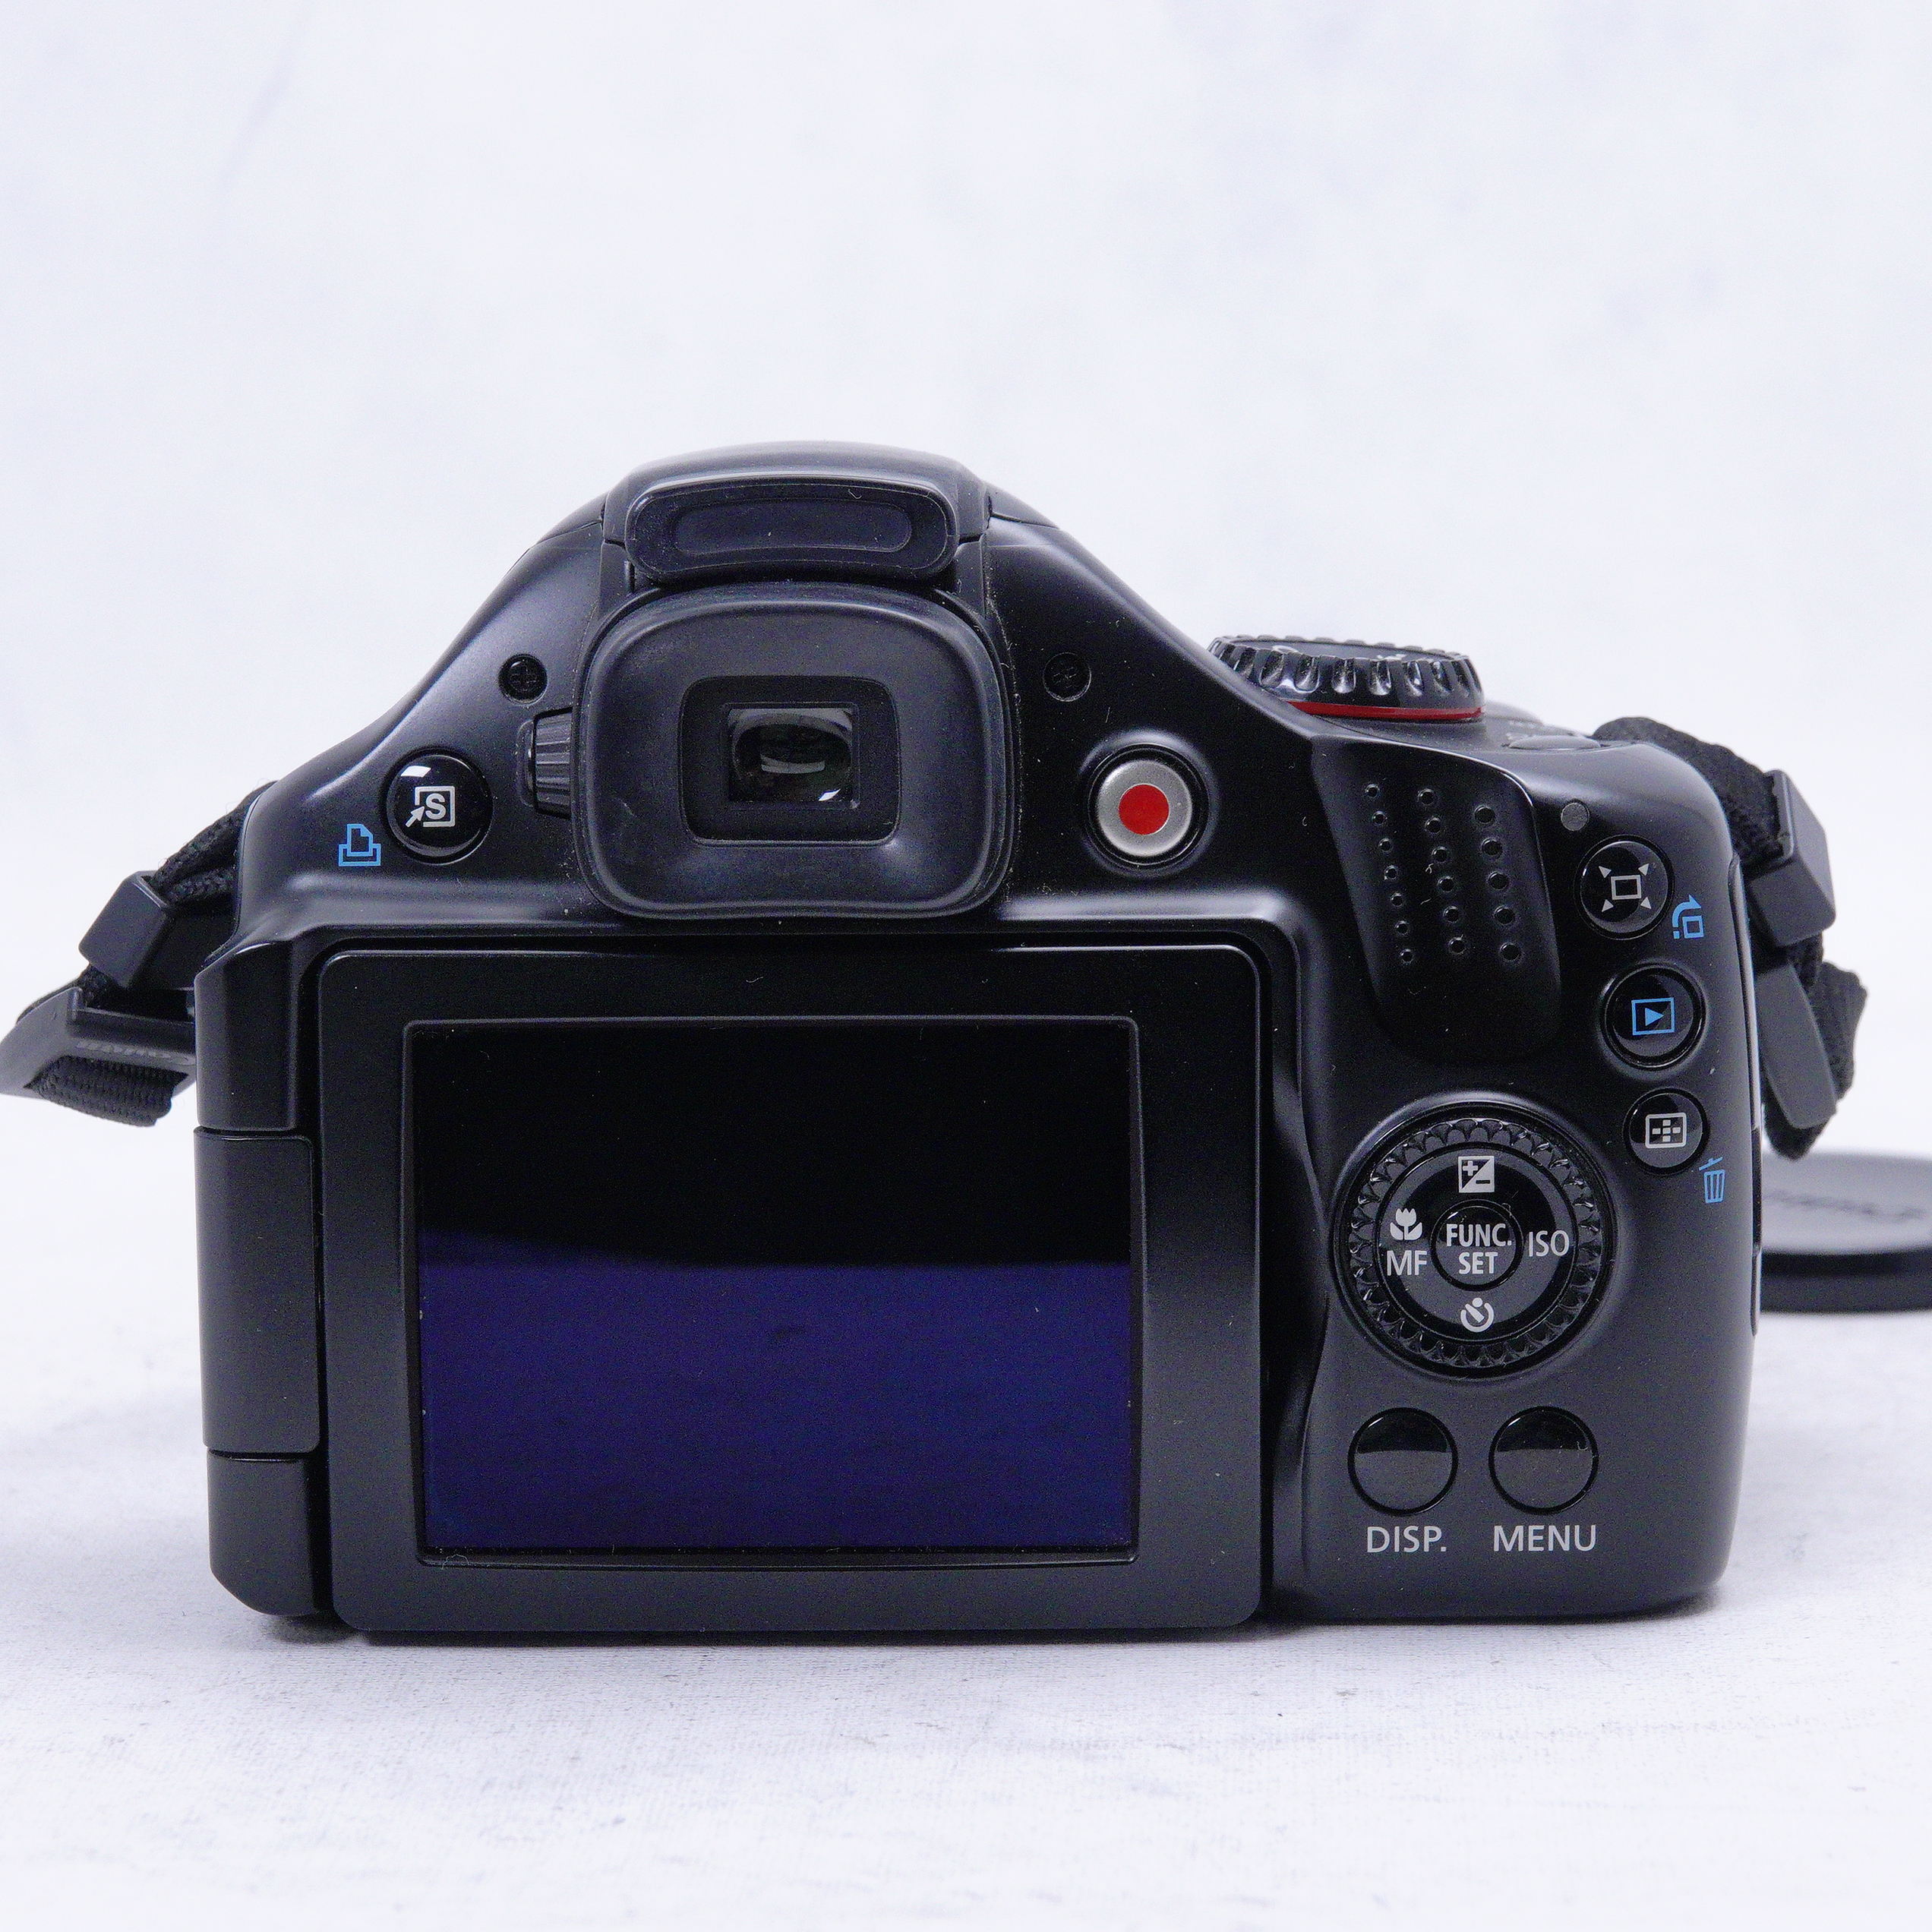 Canon PowerShot SX30 IS - Cámara Digital compacta de 14.1 MP